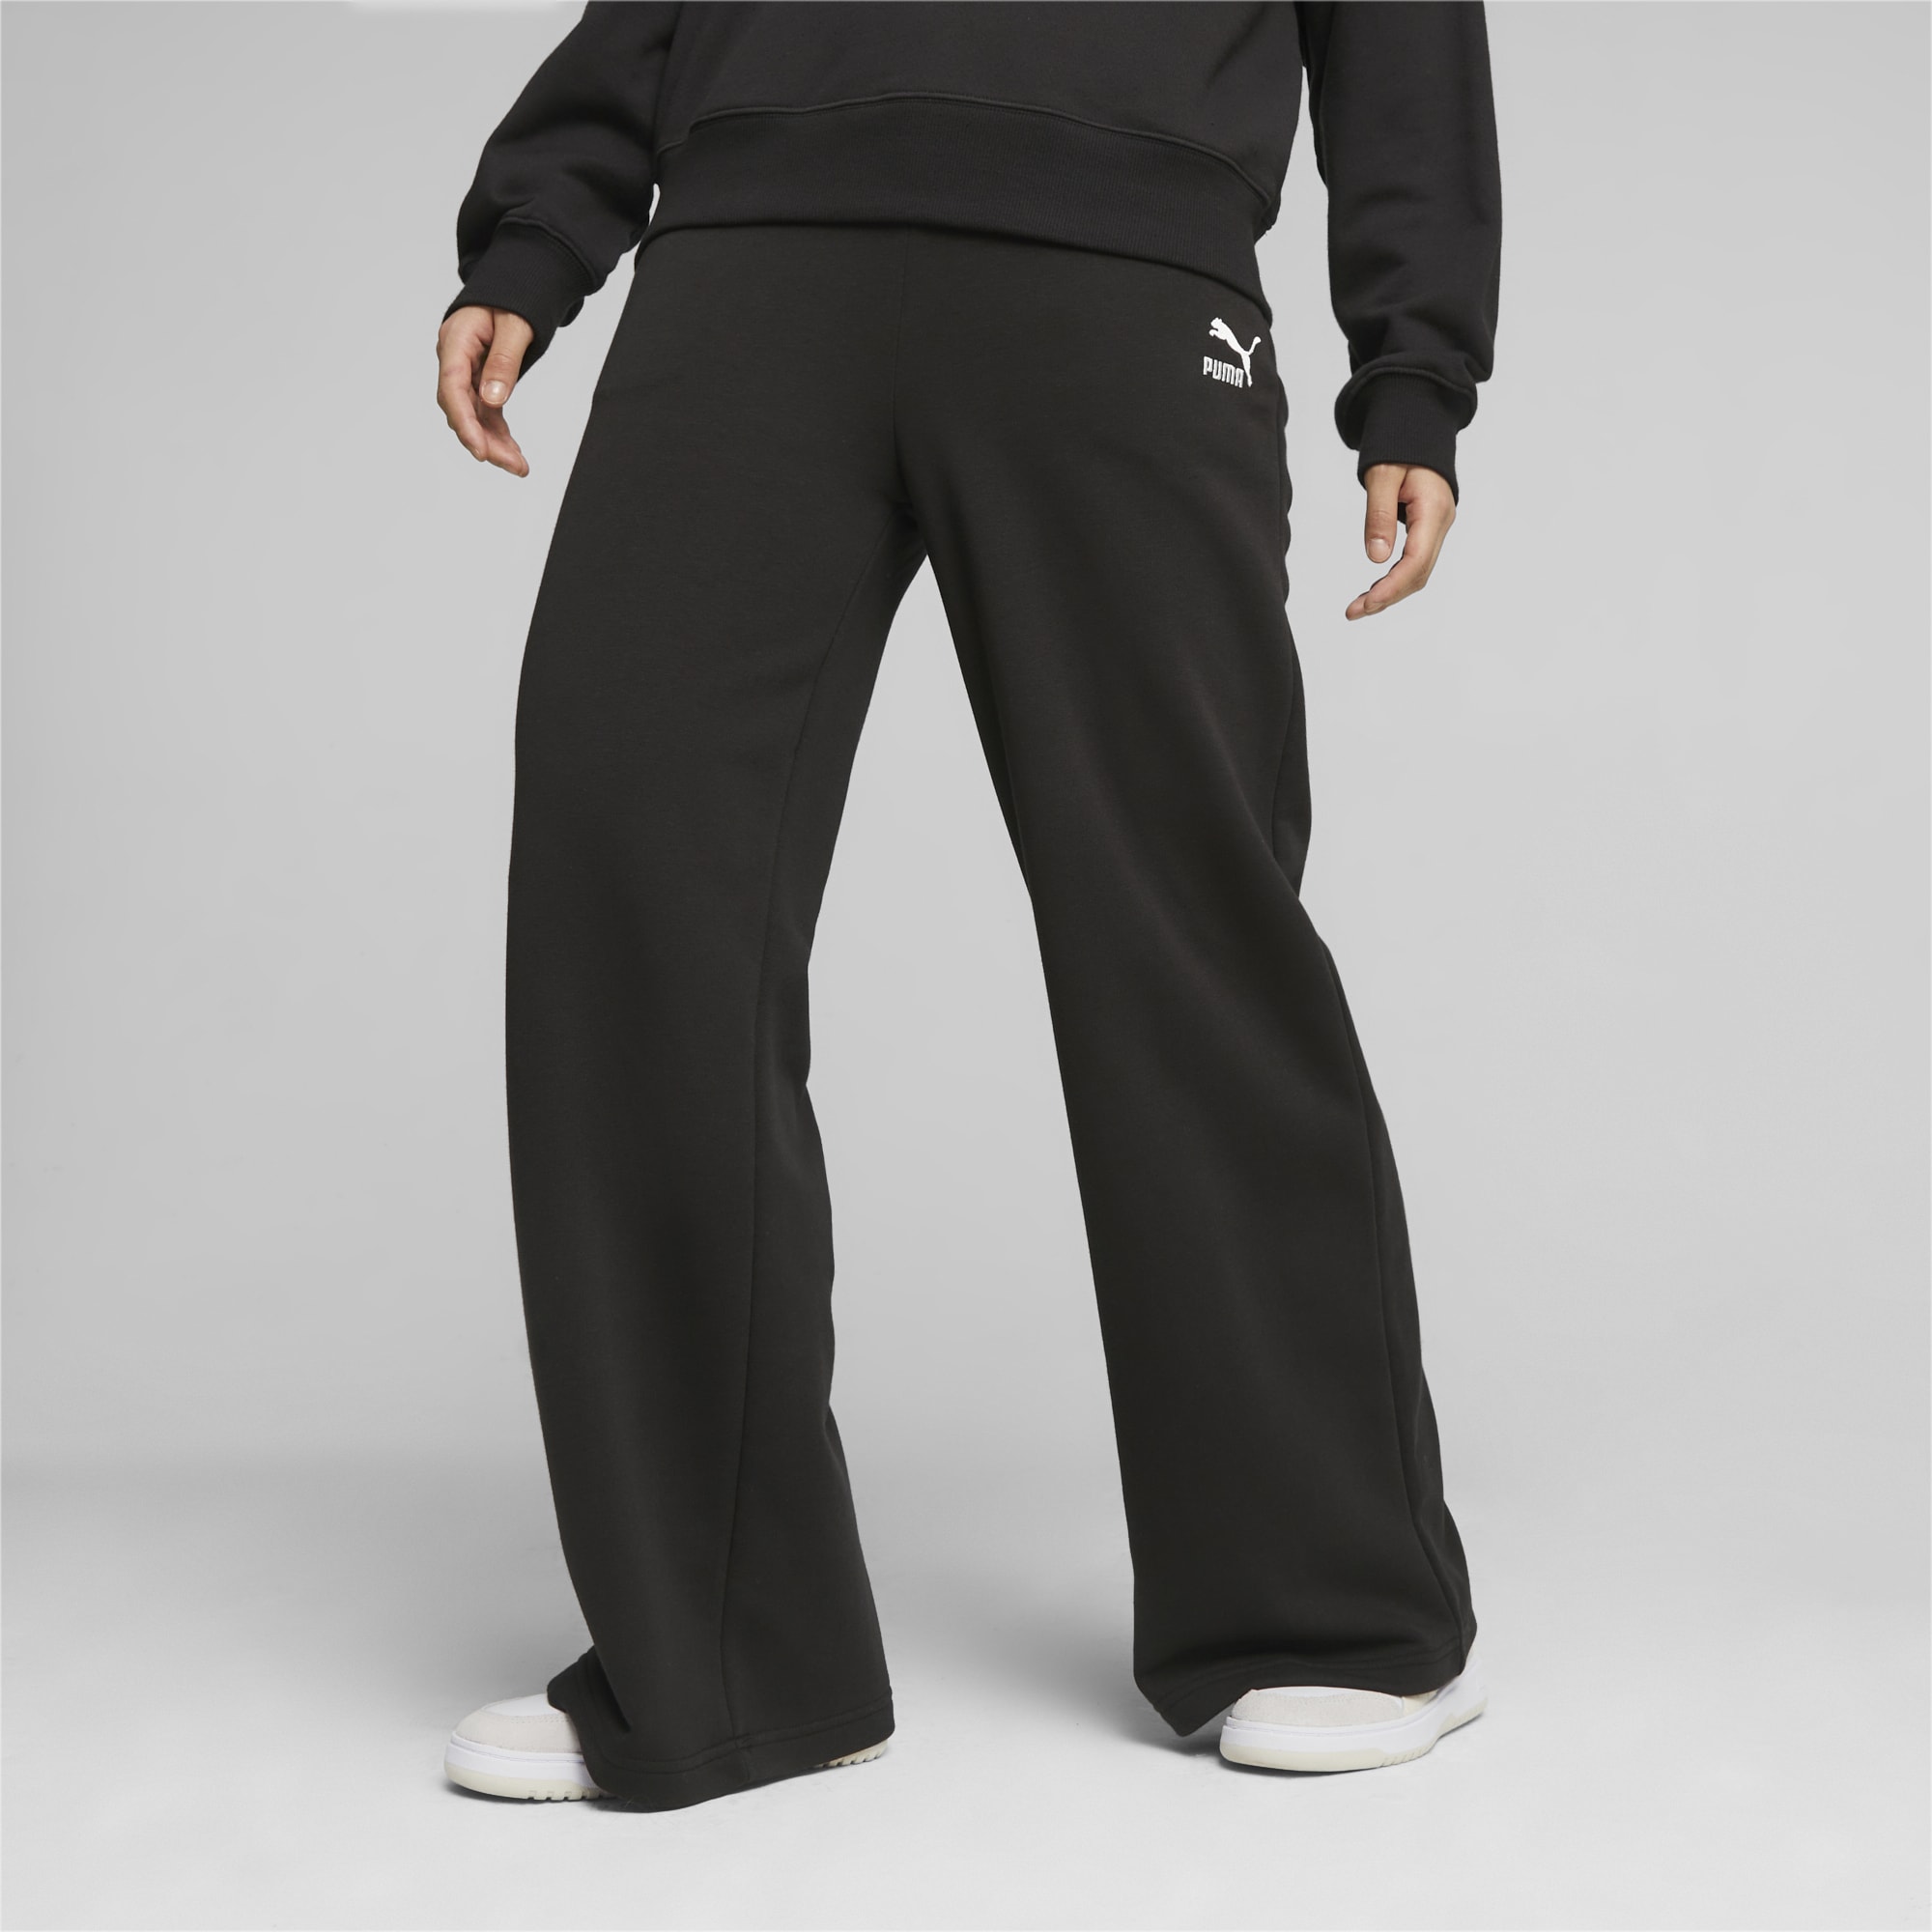 PUMA Classics Women's Relaxed Sweatpants, Black, Size 3XL, Clothing